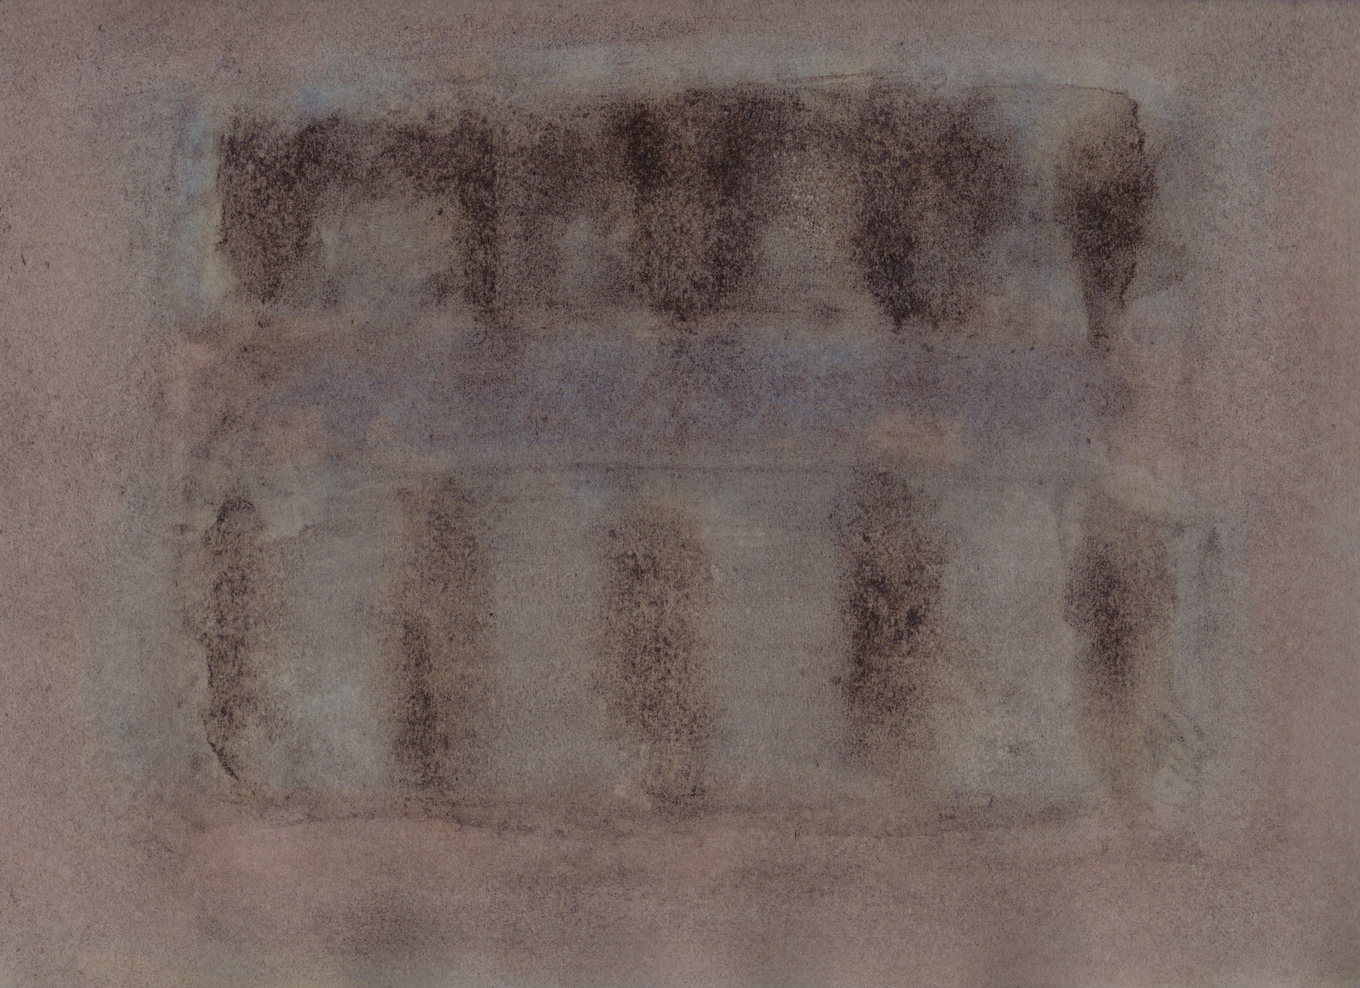 L1393 - Nicholas Herbert, British Artist, abstract painting, Residual Trace - Necropolis, 2022